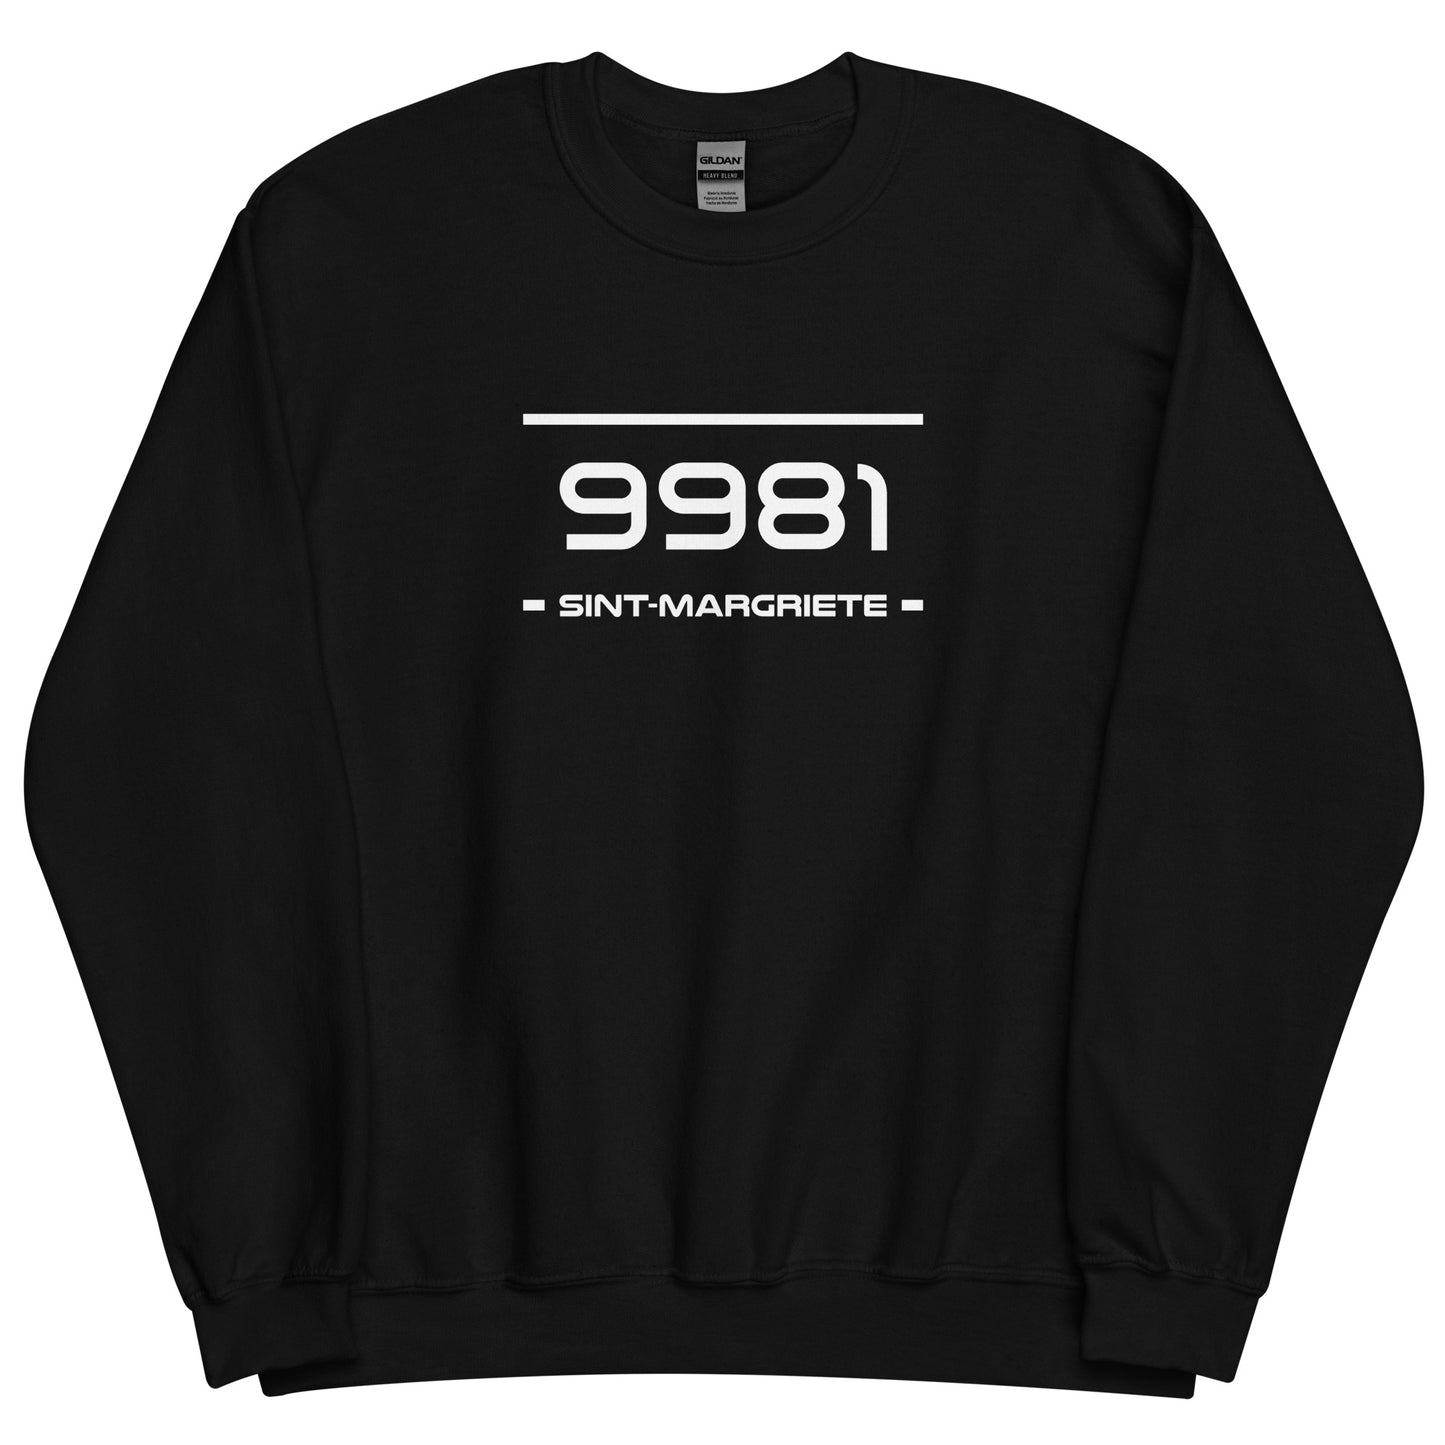 Sweater - 9981 - Sint-Margriete (M/V)